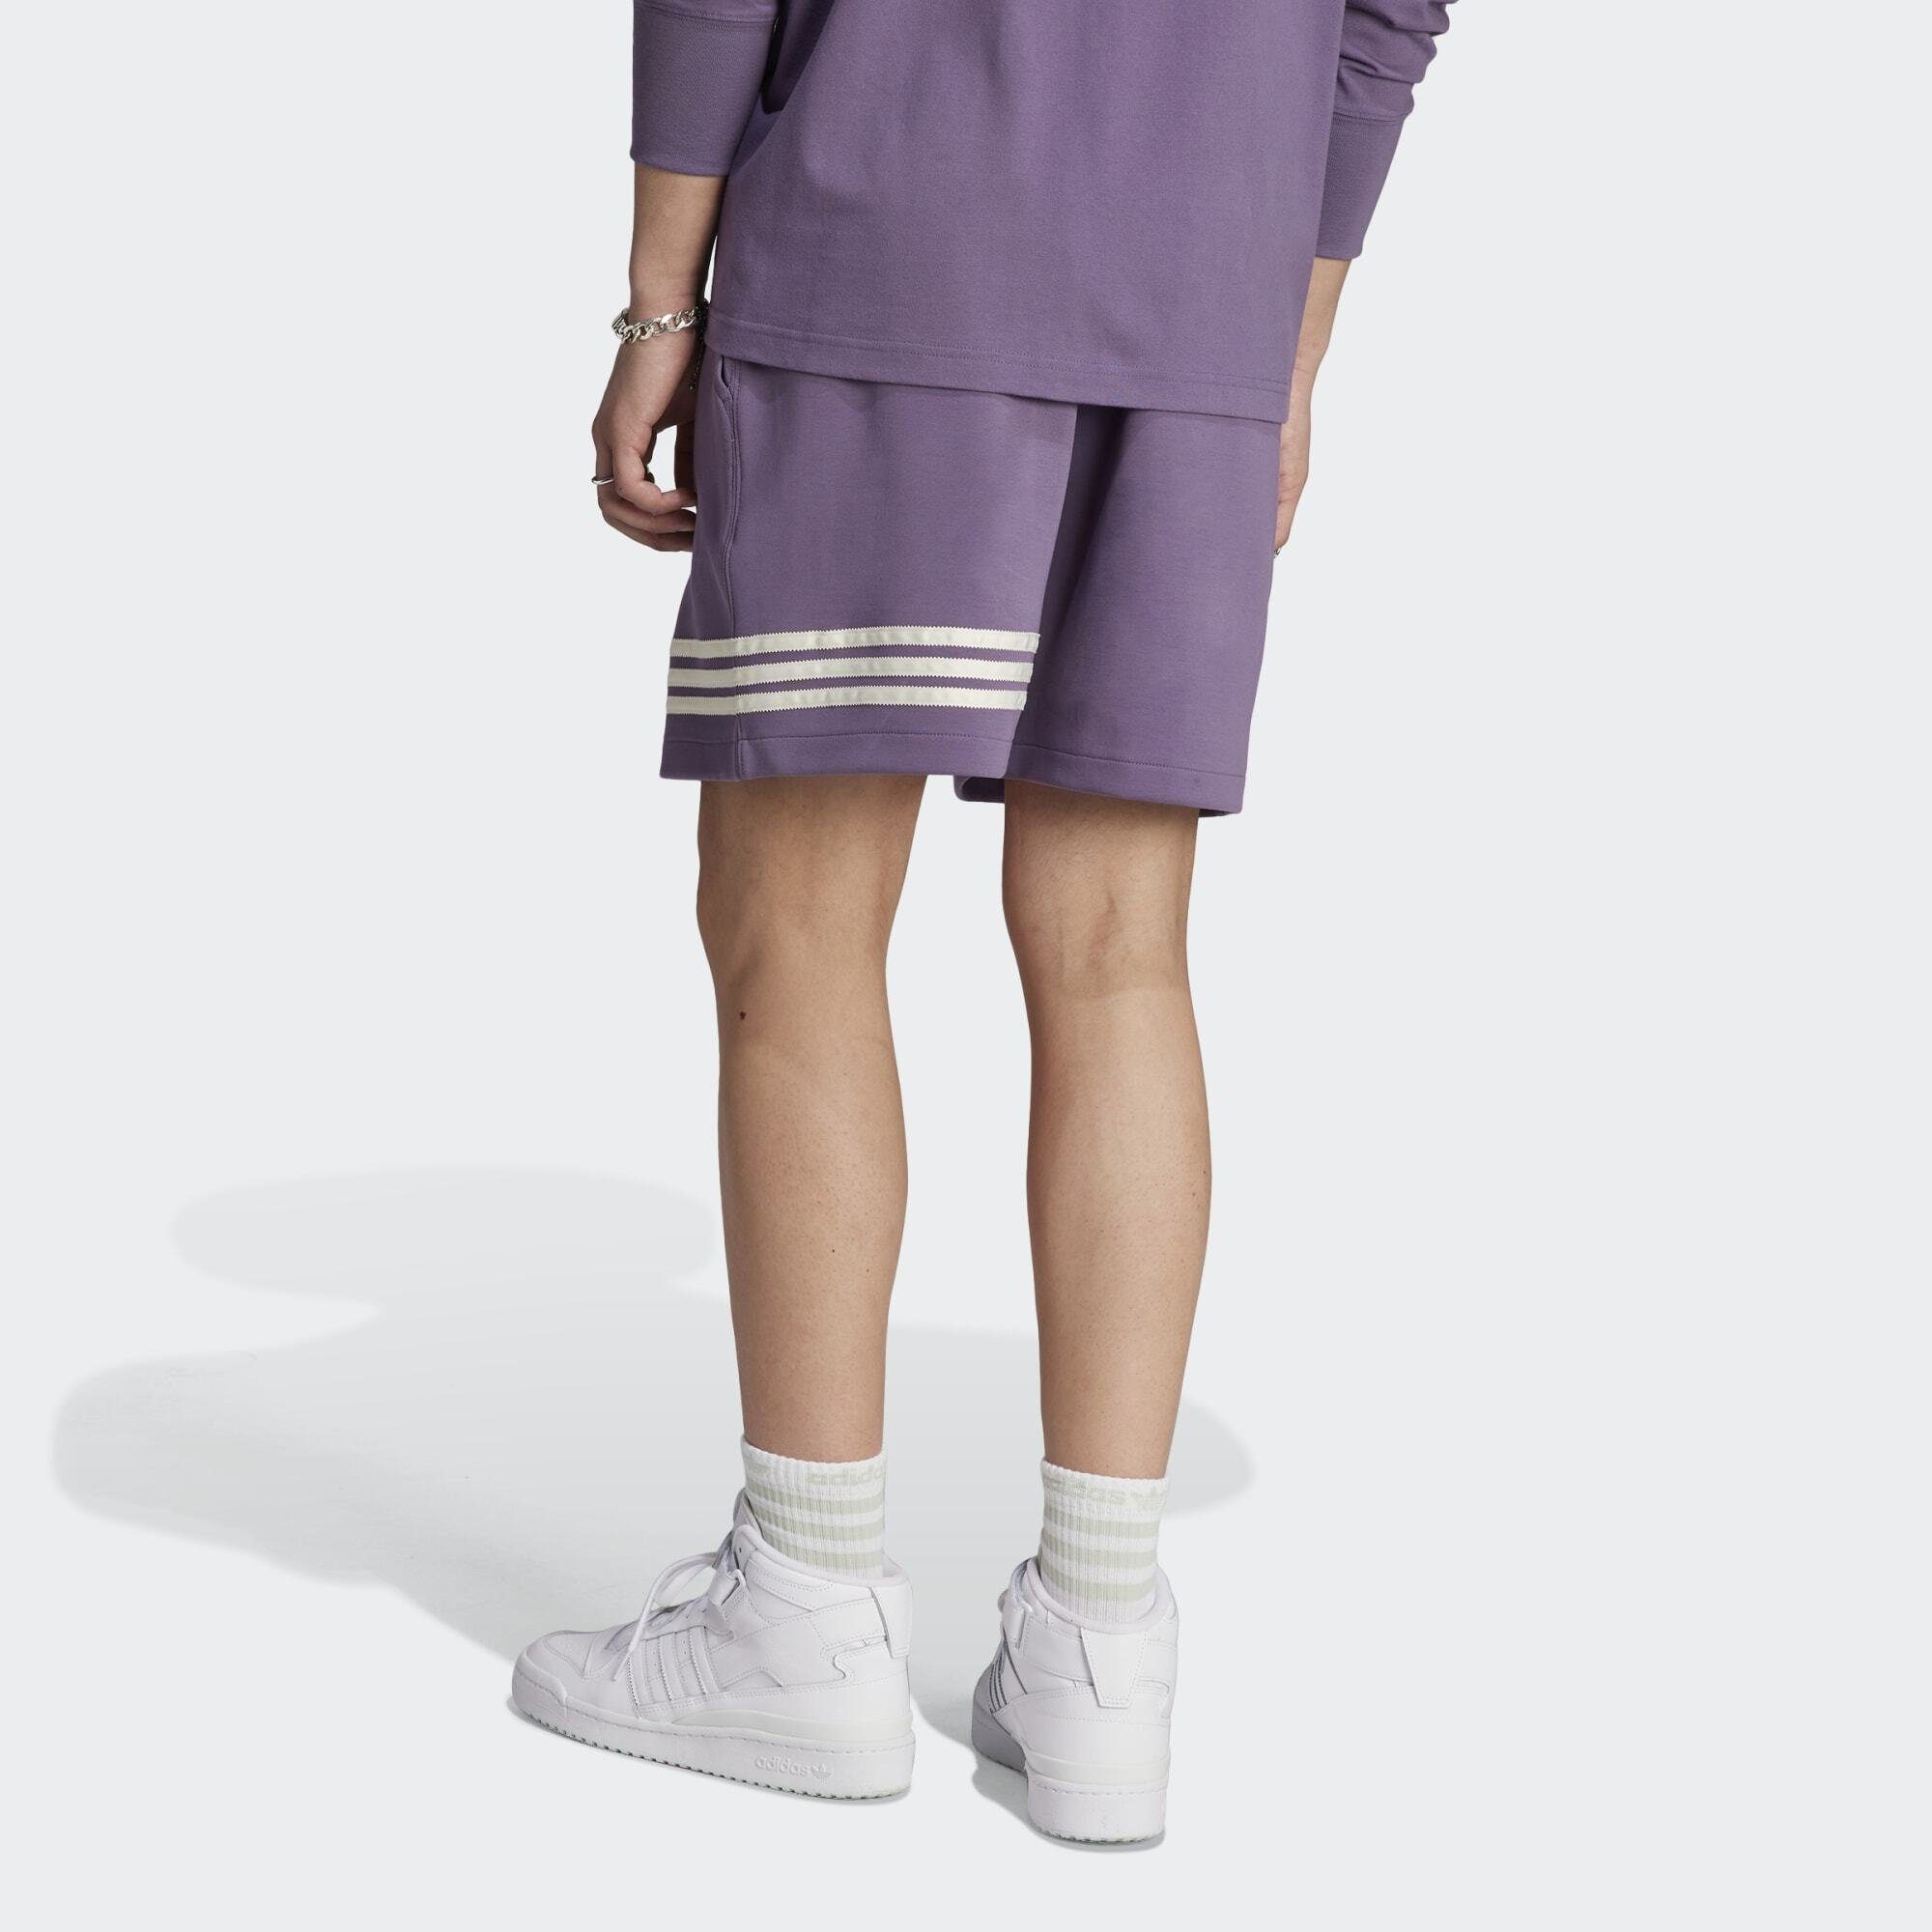 Originals Violet Funktionsshorts ADICOLOR NEUCLASSICS Shadow adidas SHORTS